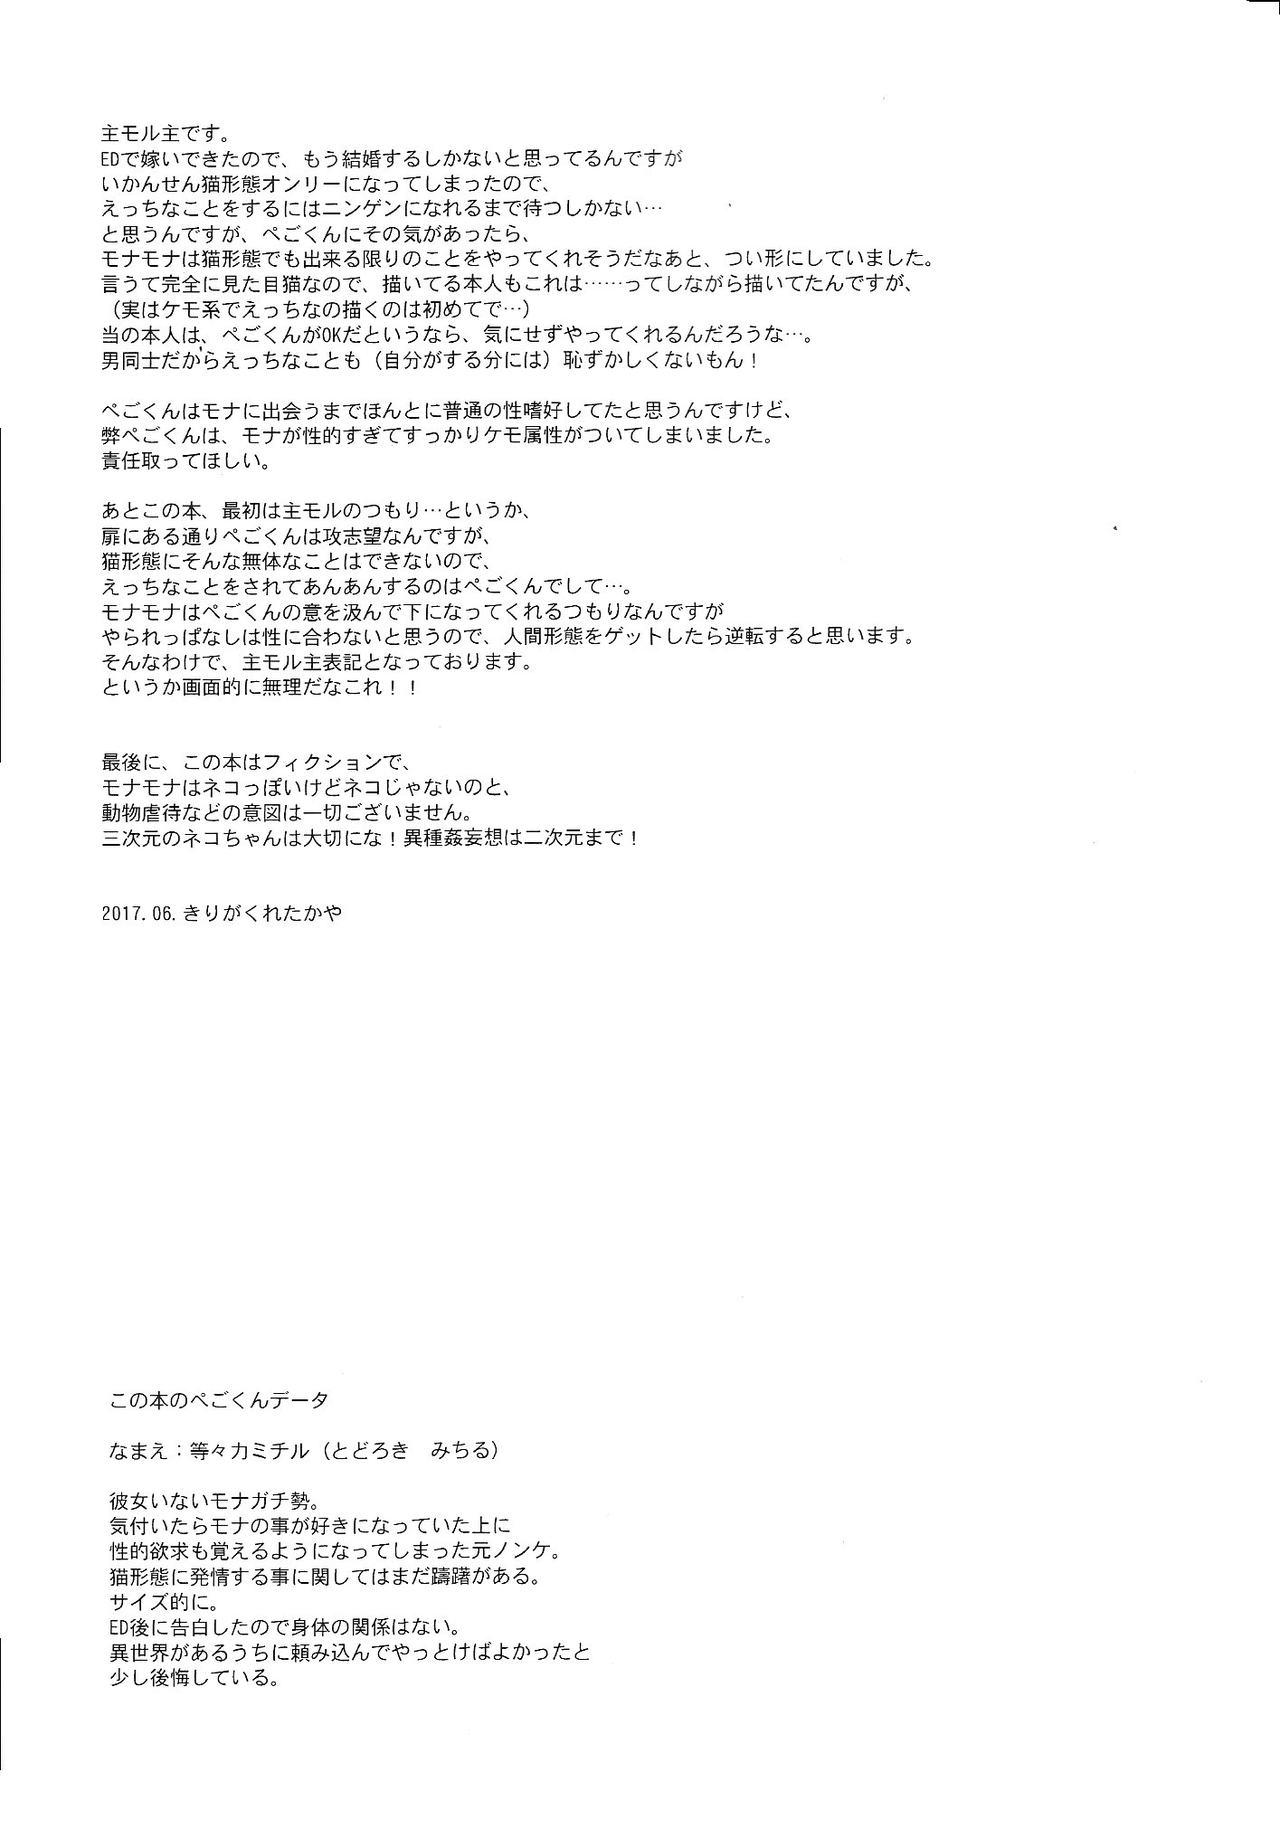 Mmf Tokubetsu Kyuukou Mementos - Persona 5 Verification - Page 3